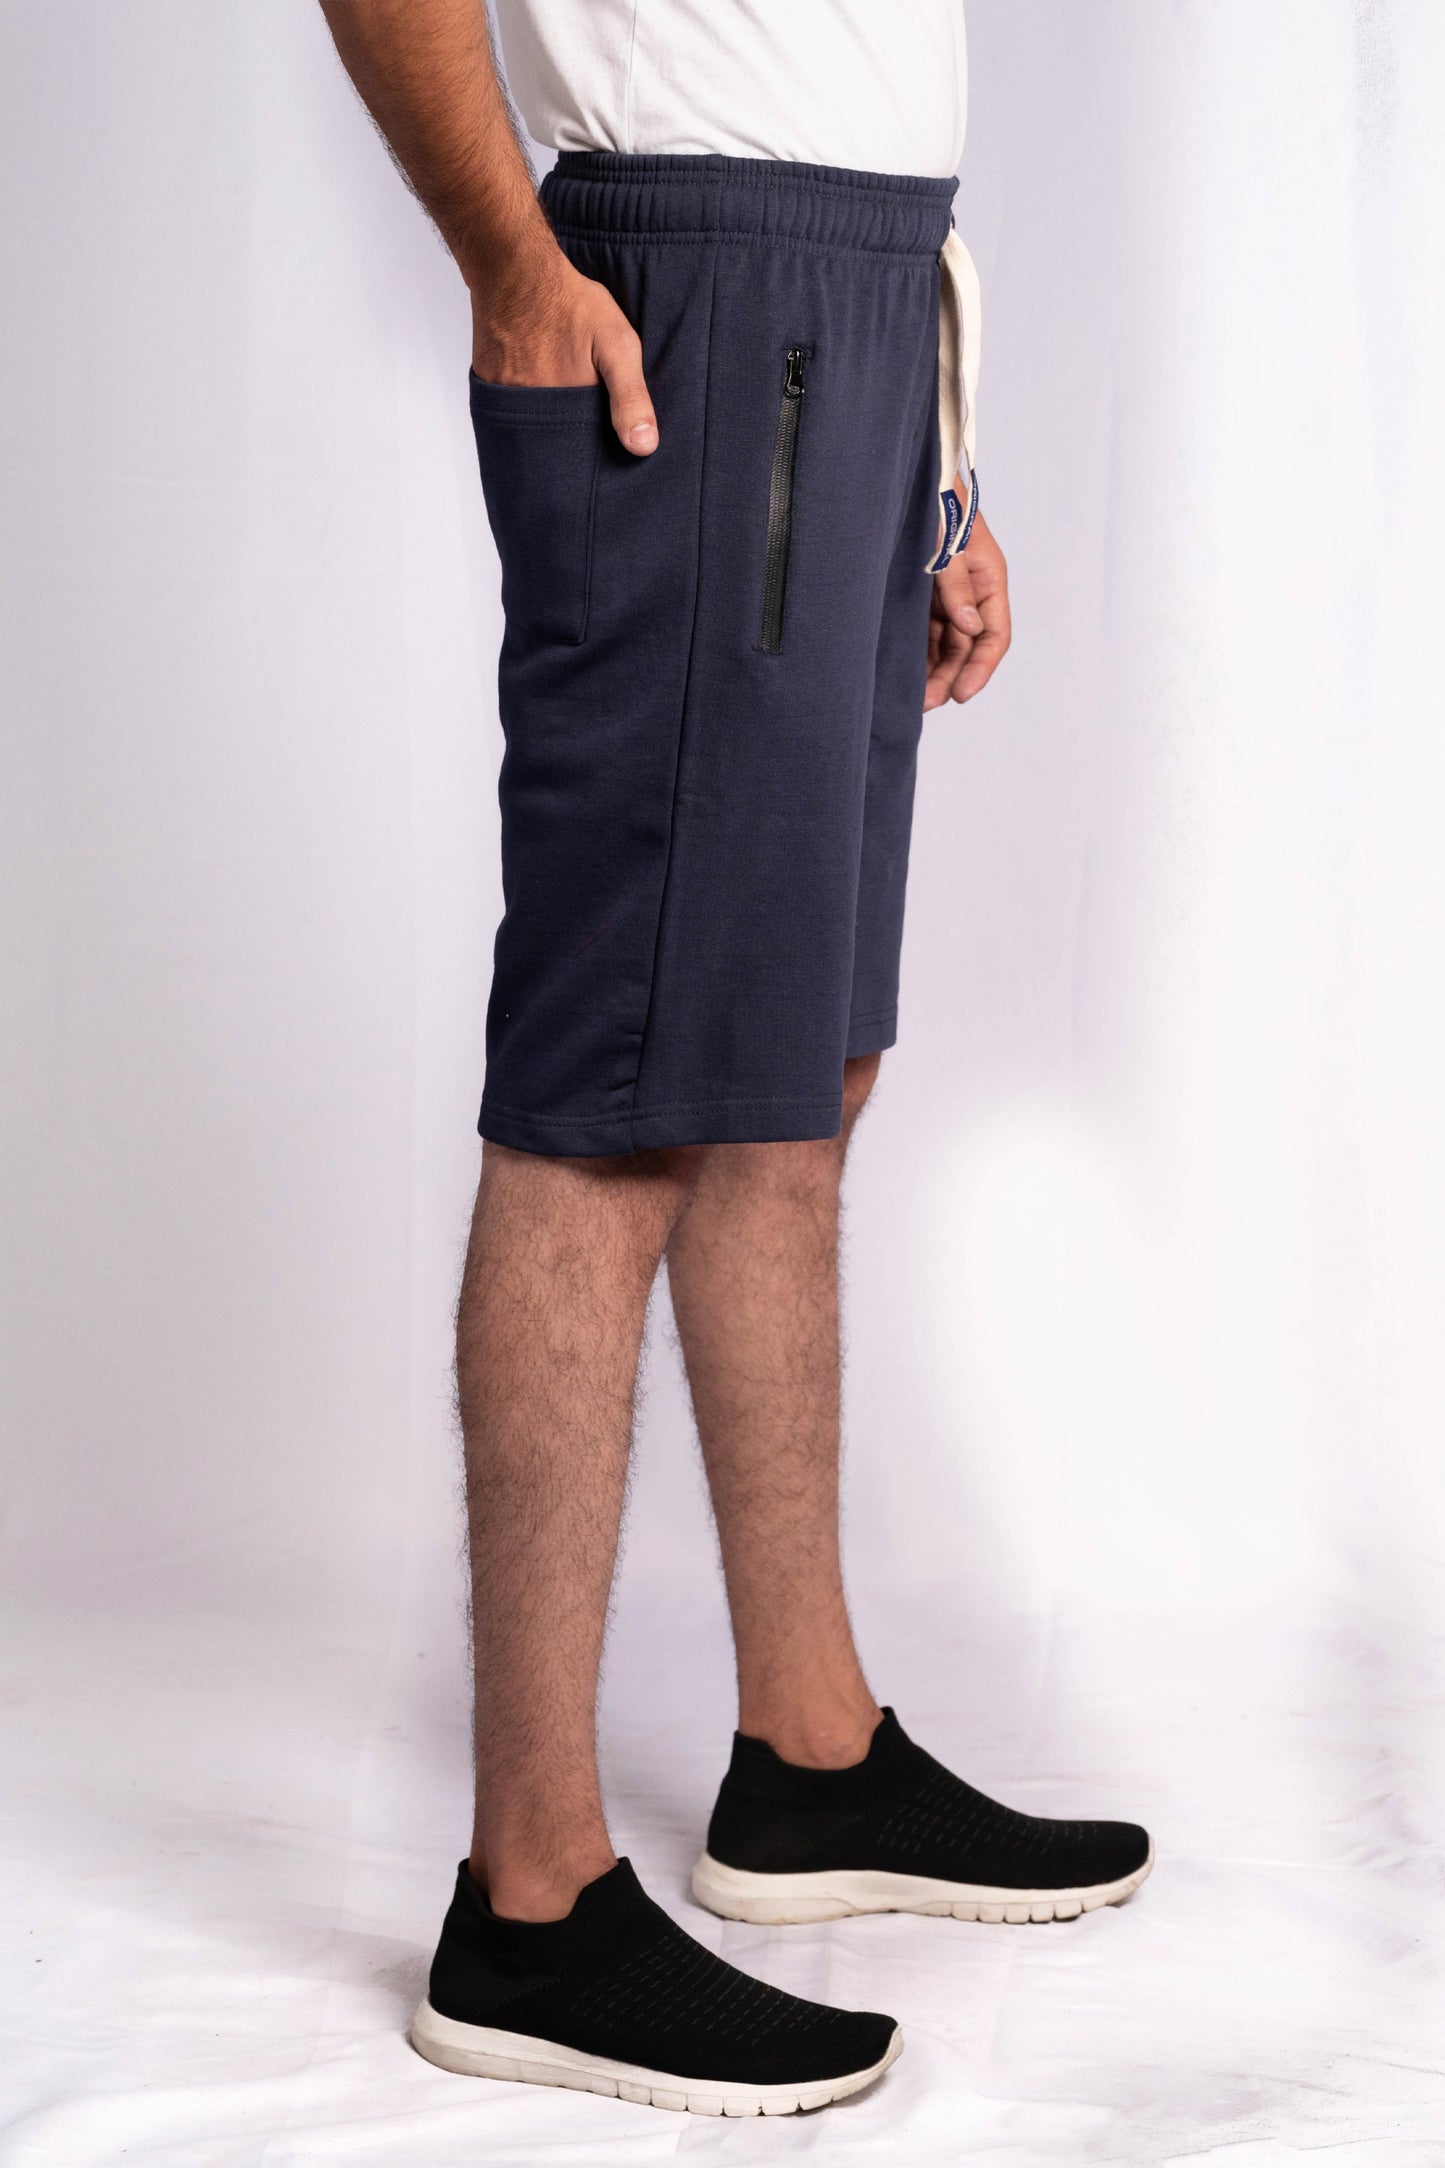 Summer Original Navy Classic Fleece Shorts